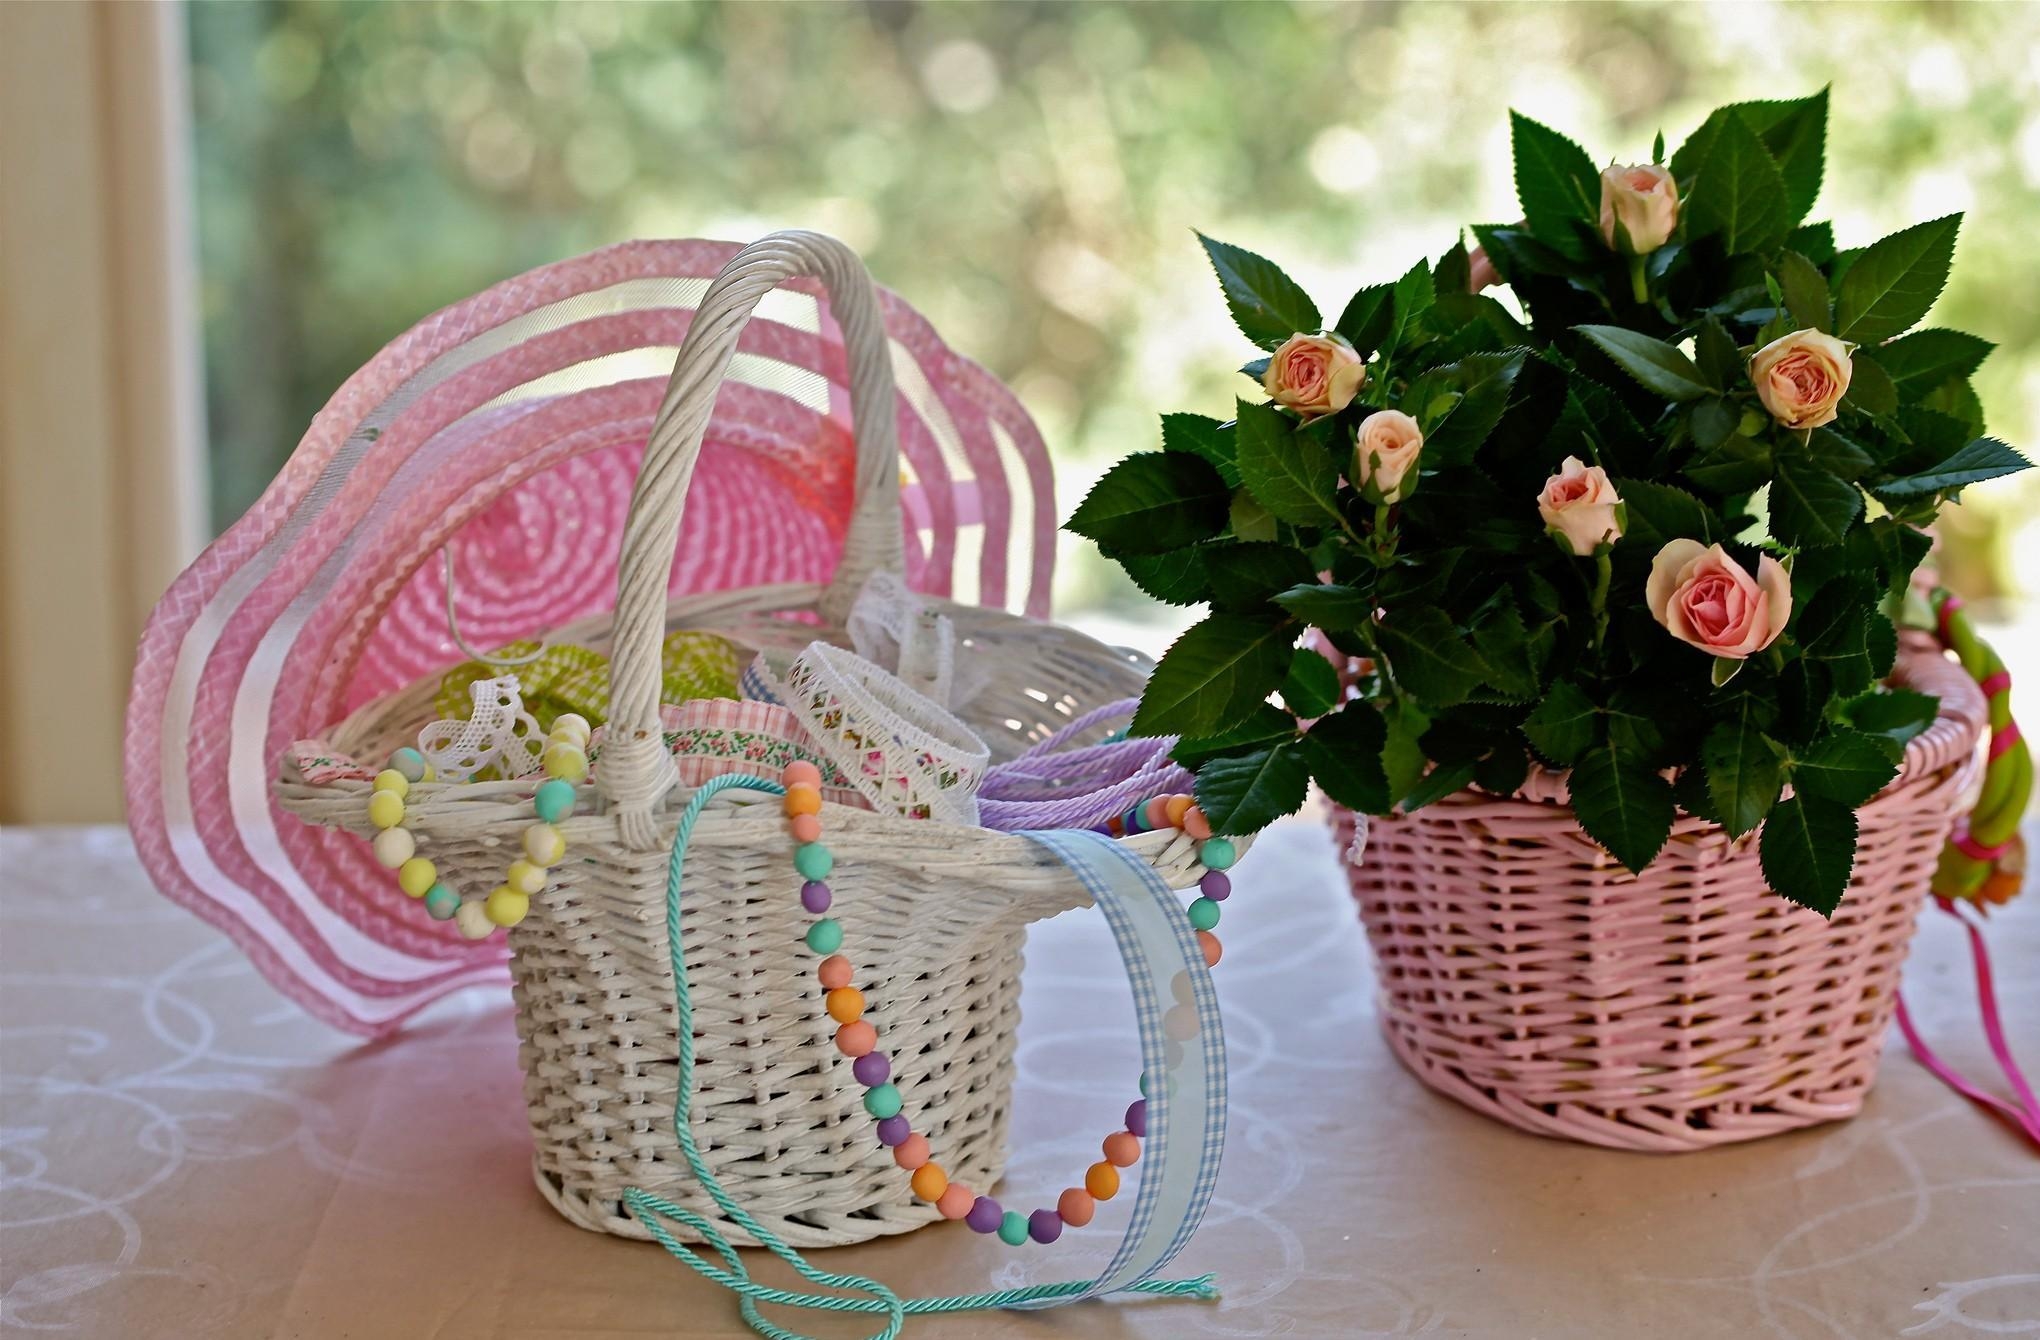 flowers, roses, beads, tape, basket, hat, baskets, braid